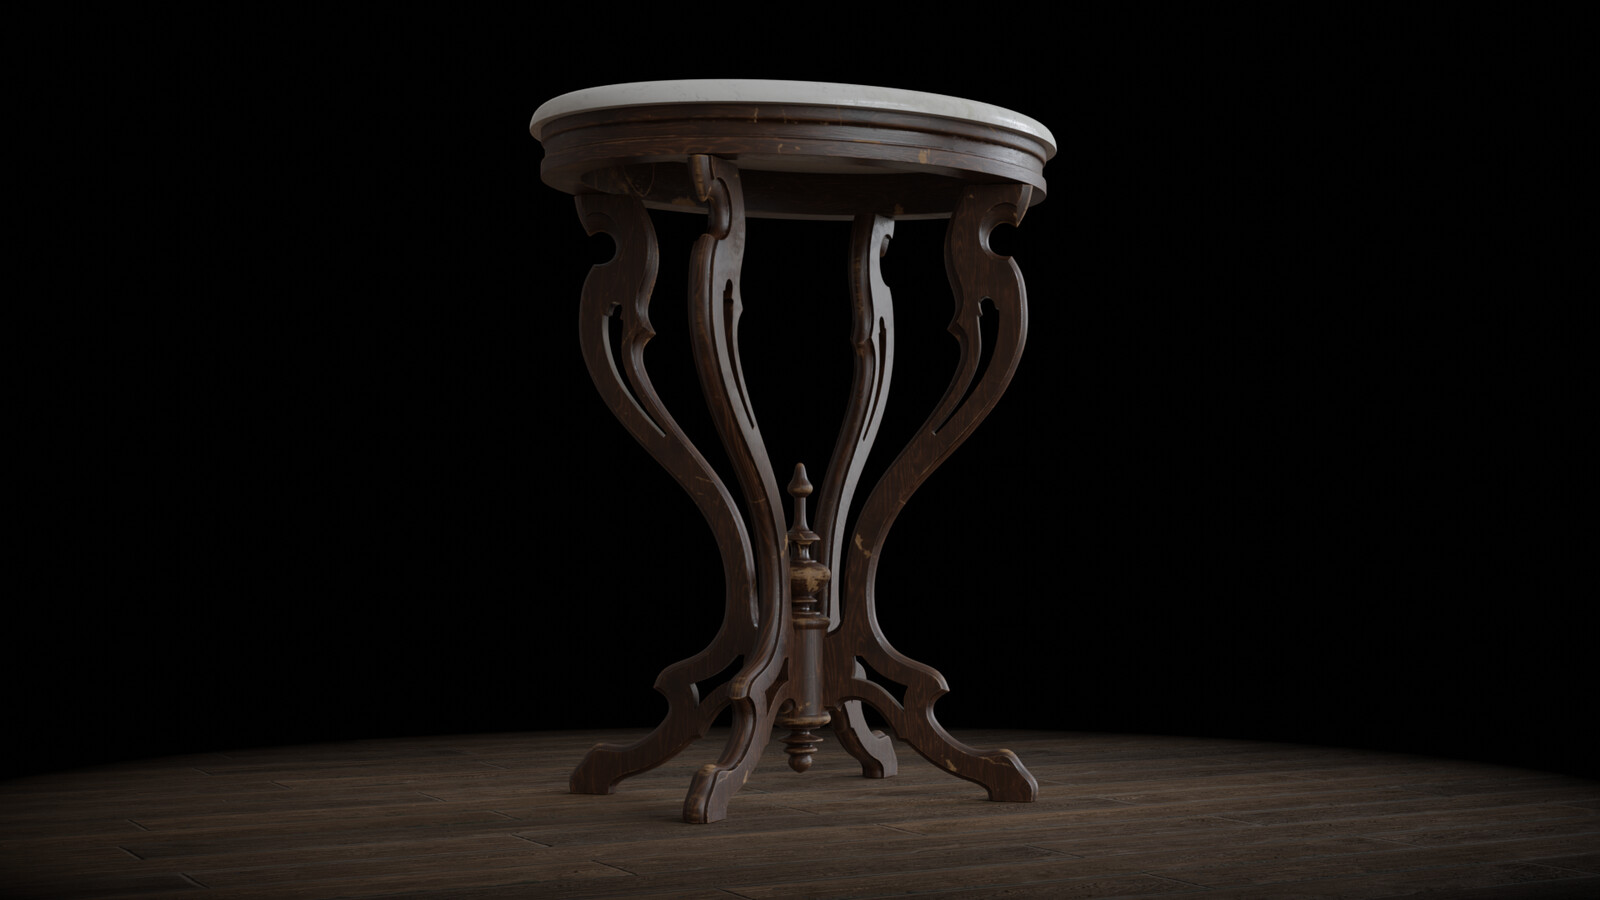 Find it here! https://artofkarlb.com/store/XwkP/antique-pedestal-table-001